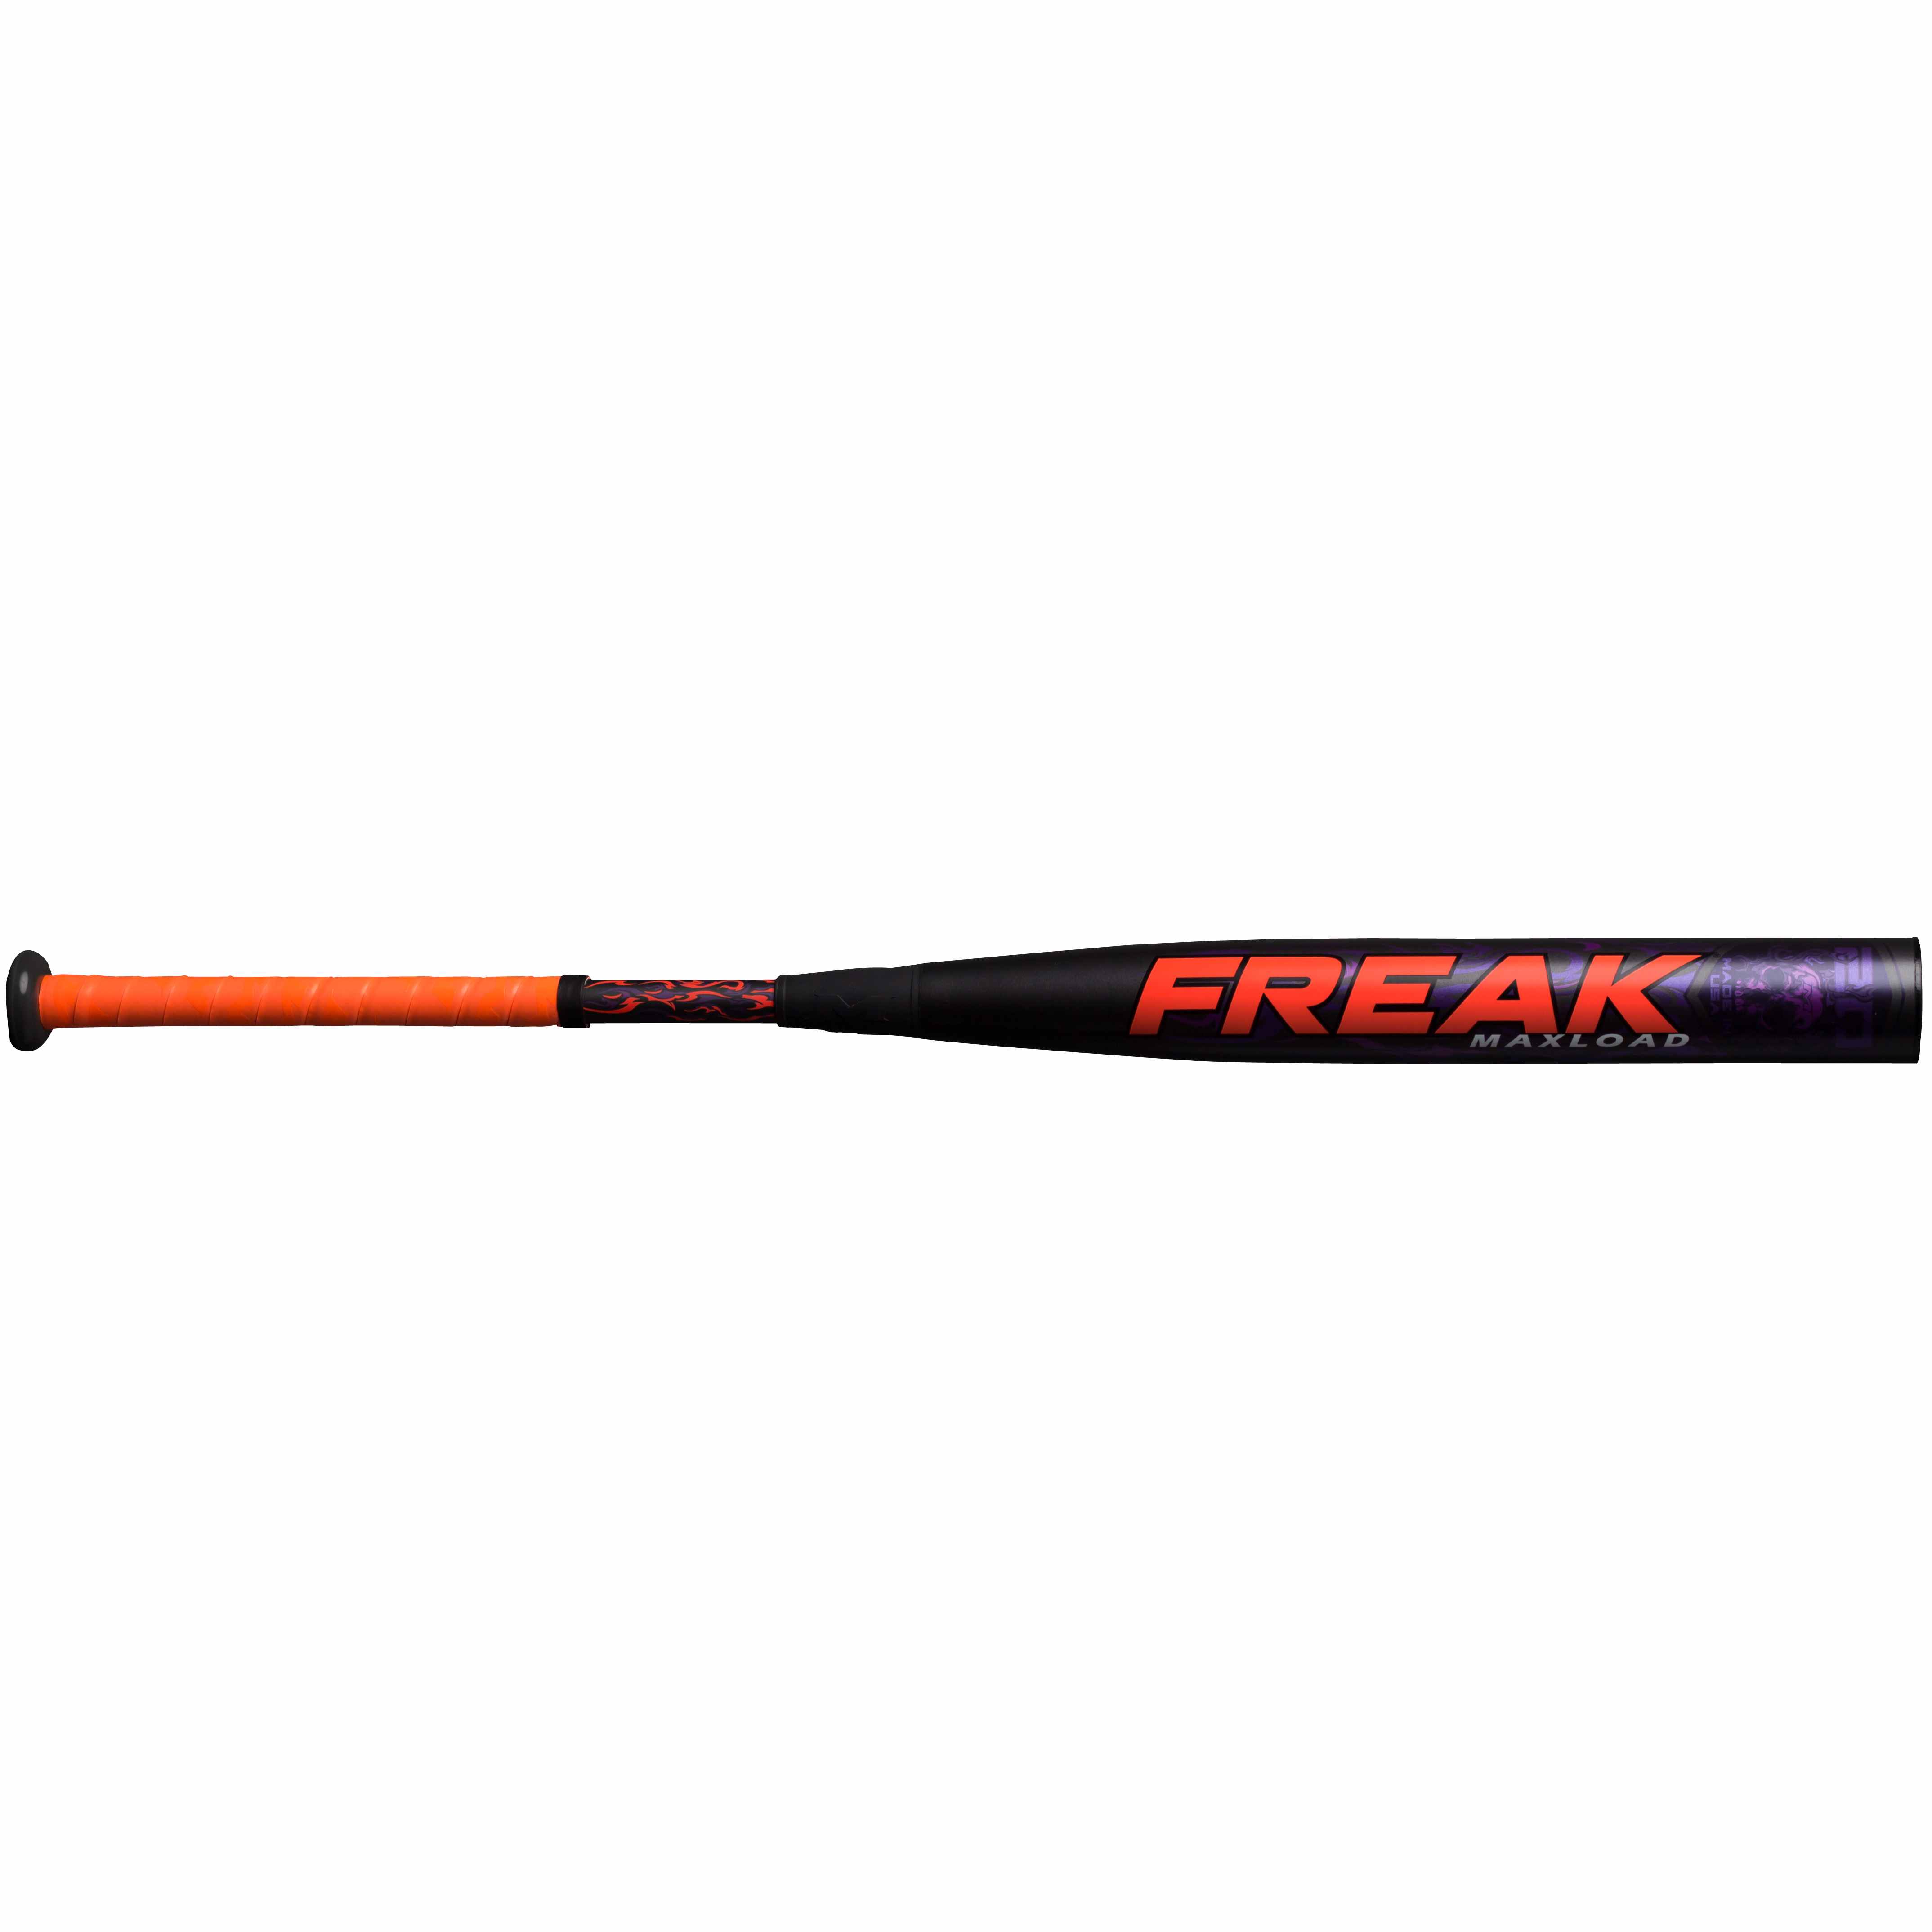 Miken freakshow softball bat for sale